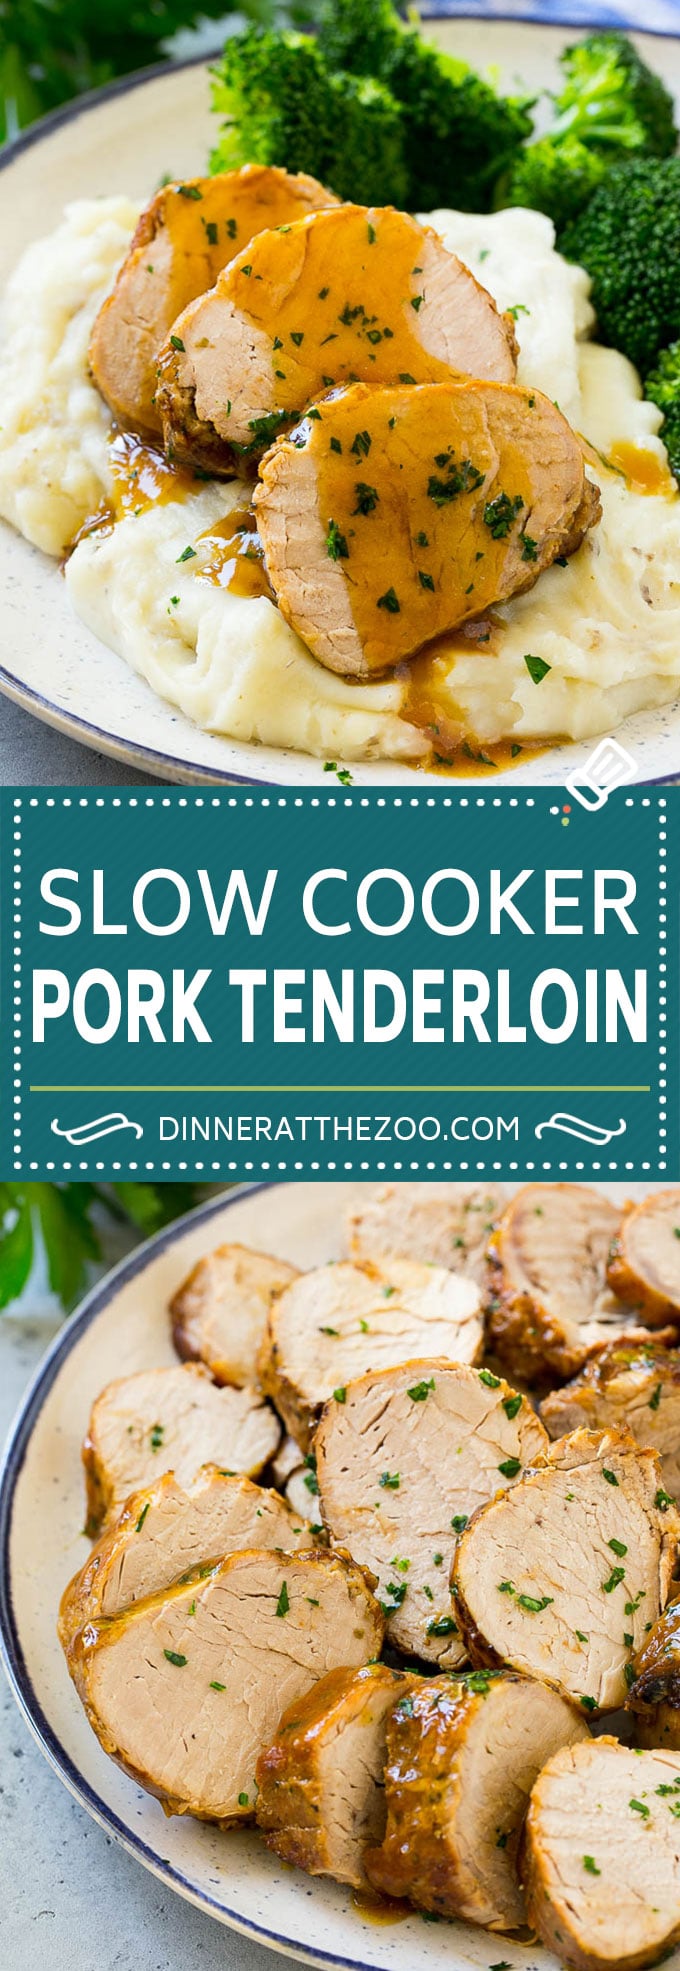 Slow Cooker Pork Tenderloin Recipe | Crock Pot Pork Tenderloin | Easy Pork Tenderloin #slowcooker #crockpot #pork #dinner #dinneratthezoo